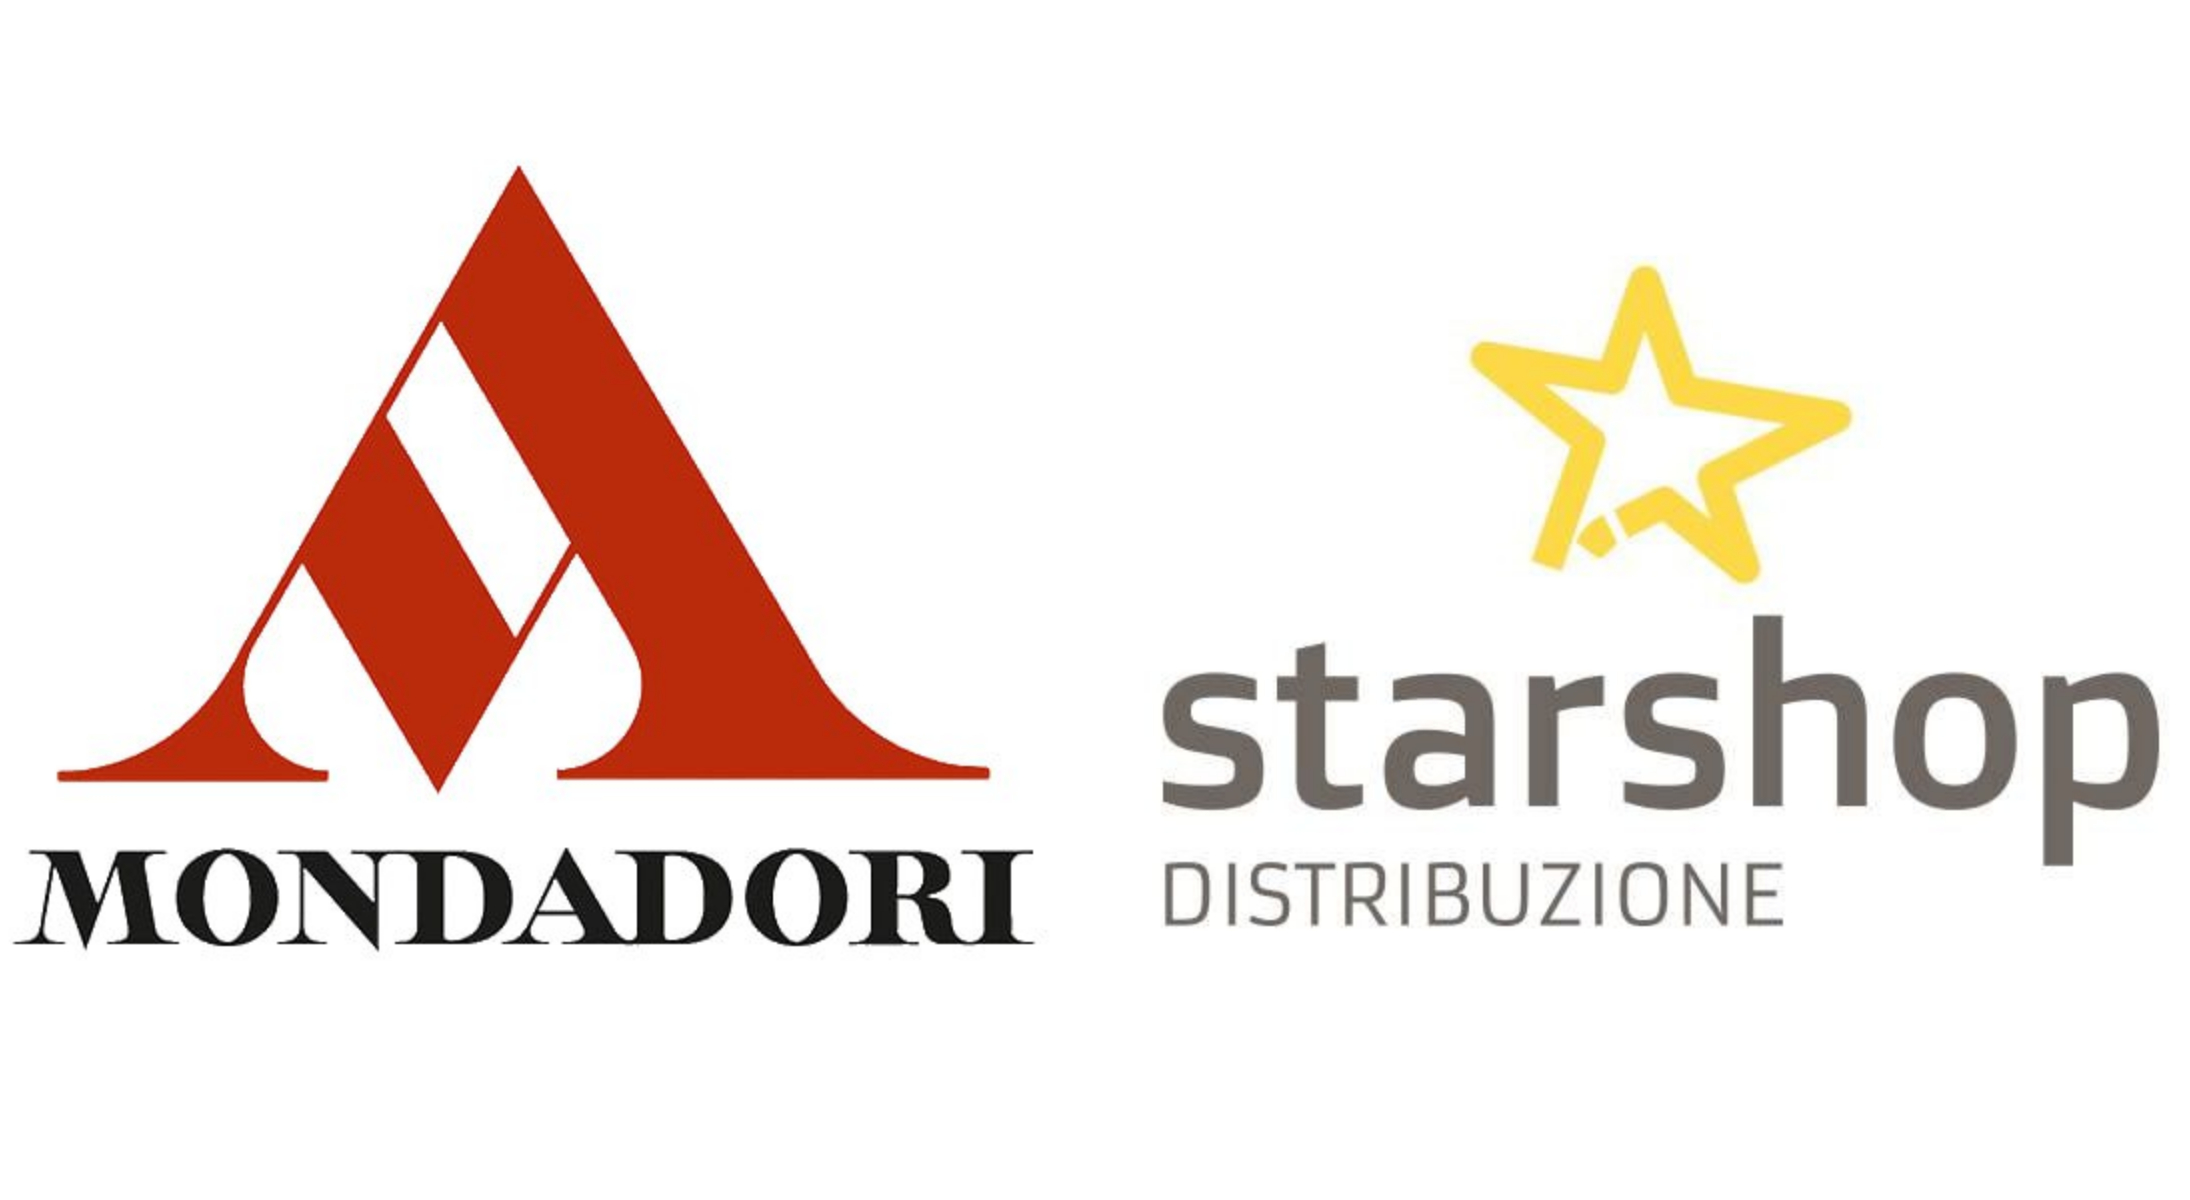 Mondadori Star Shop